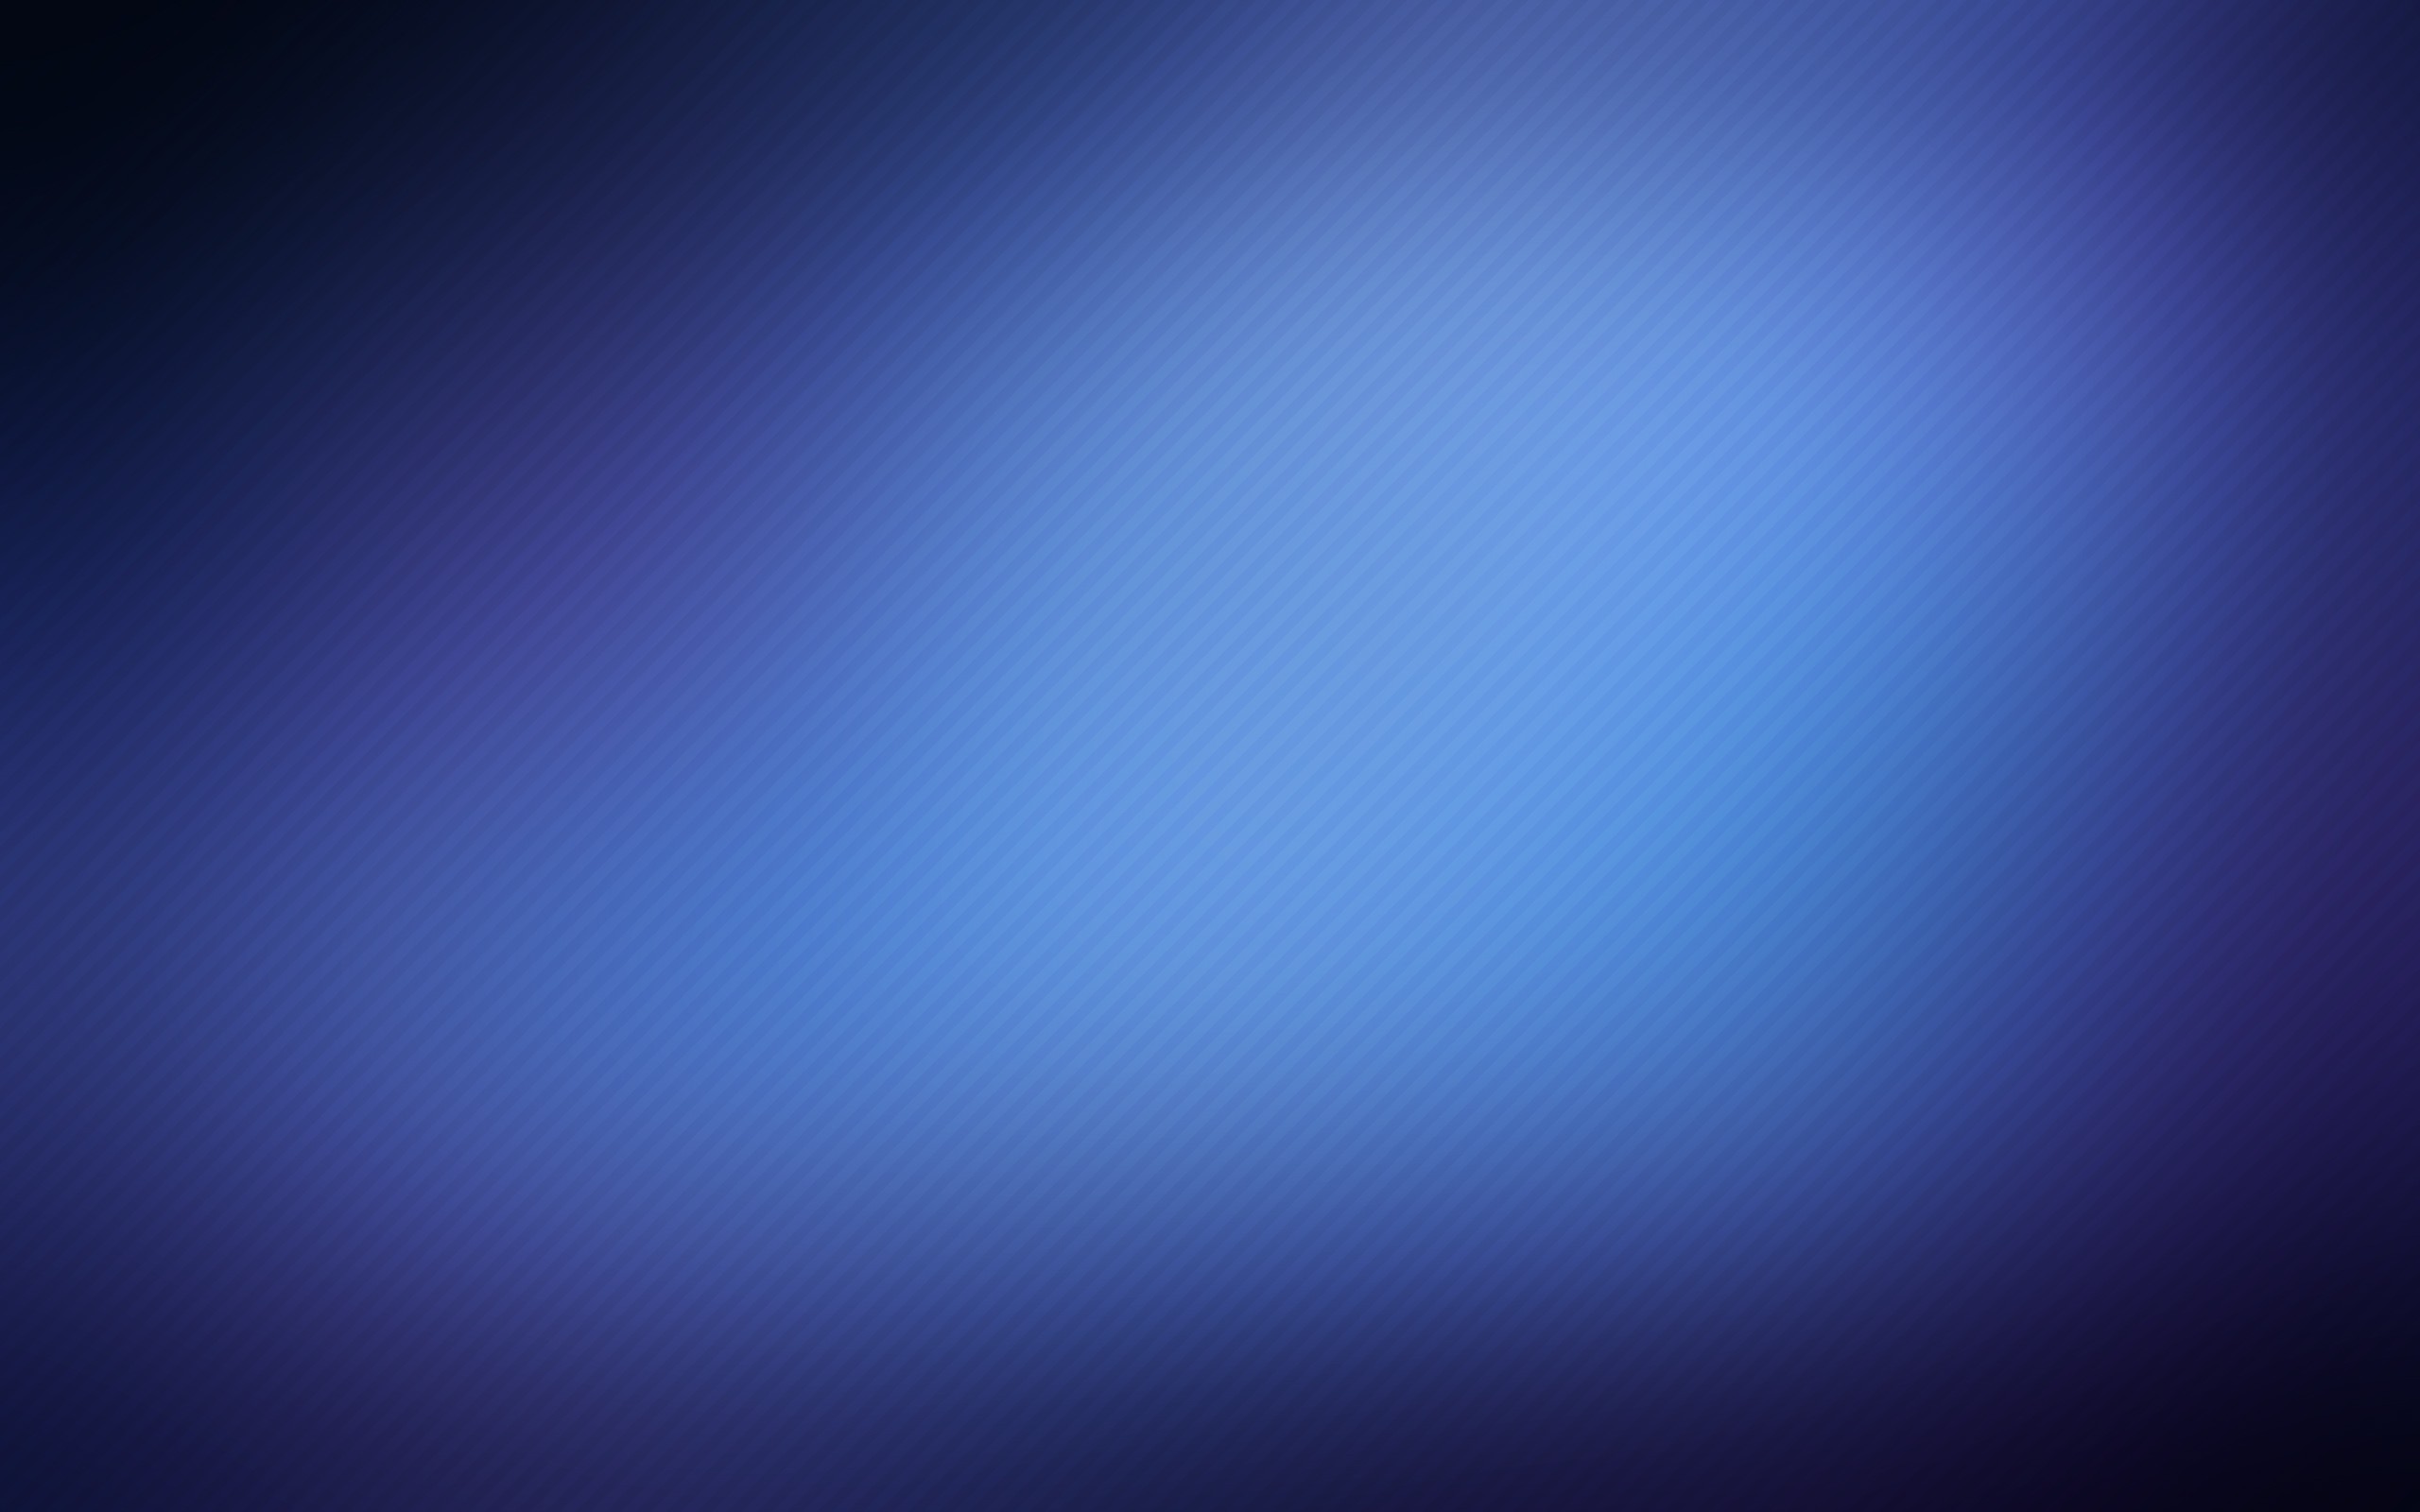 Displaying Image For Dark Blue Plain Background